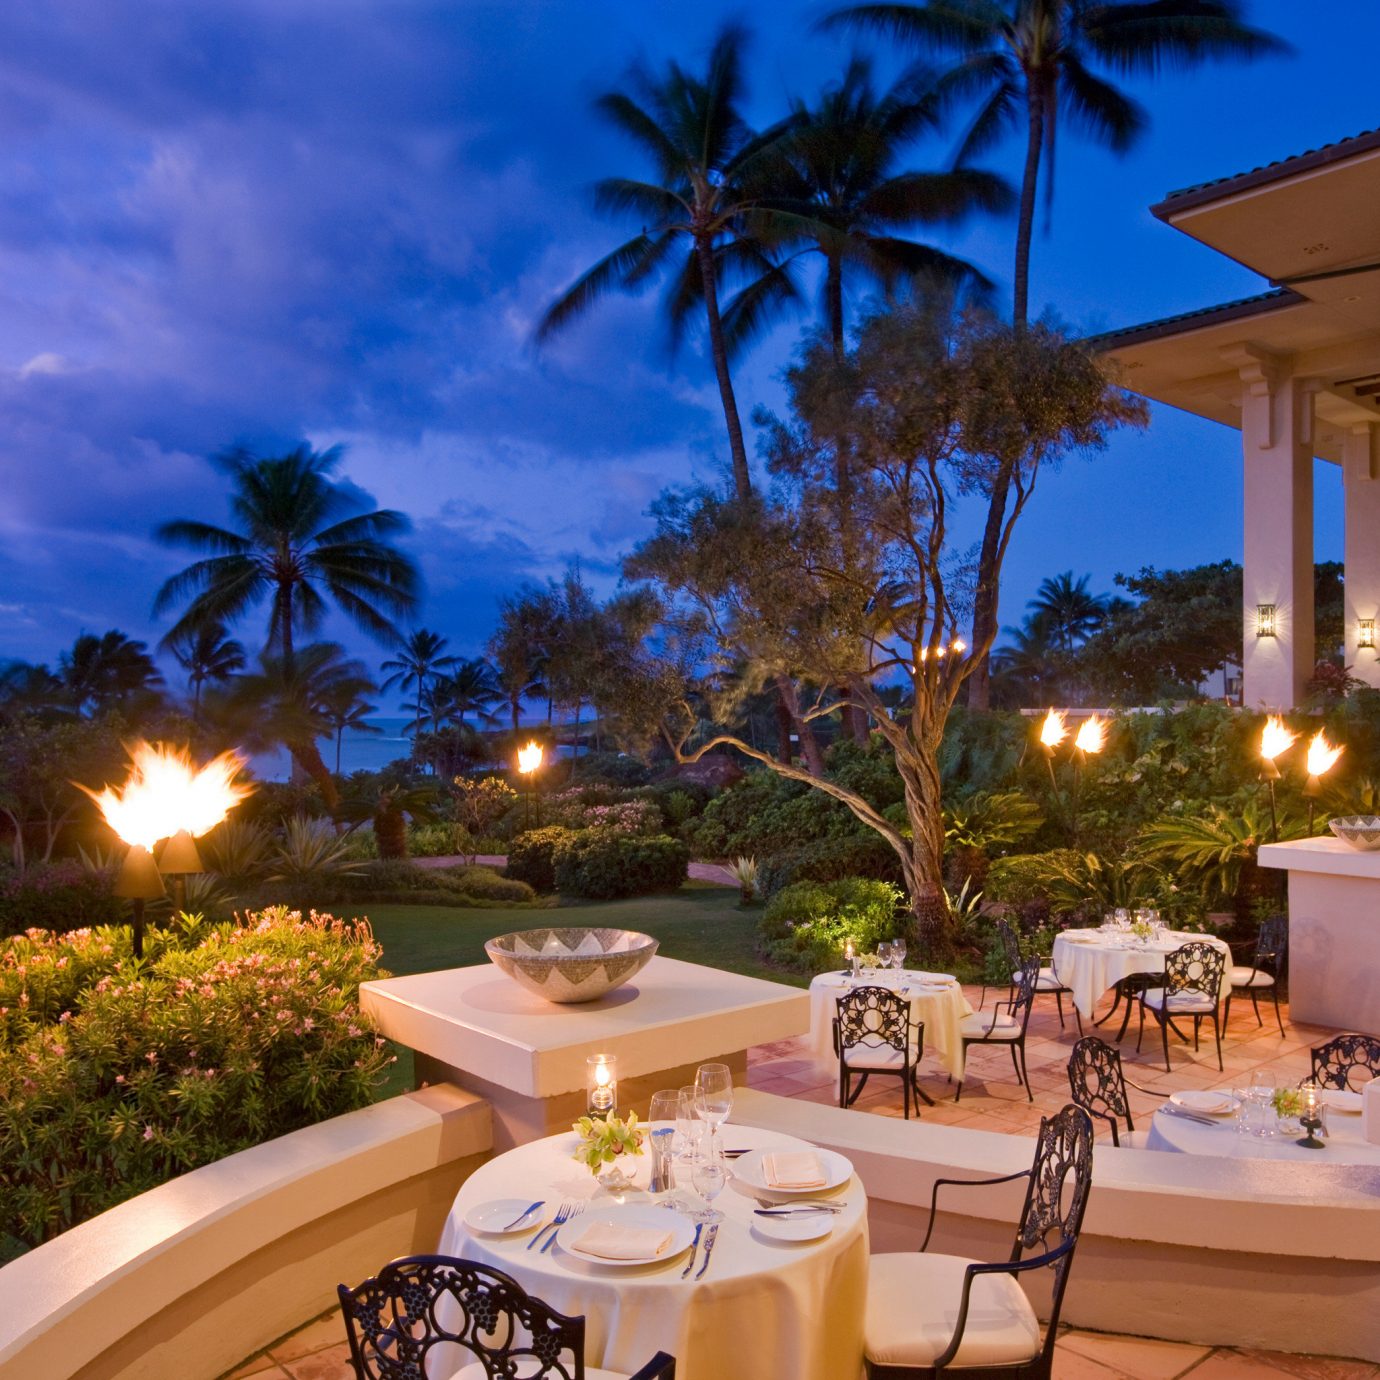 Dining Drink Eat Nightlife Resort Scenic views tree property Villa home caribbean mansion